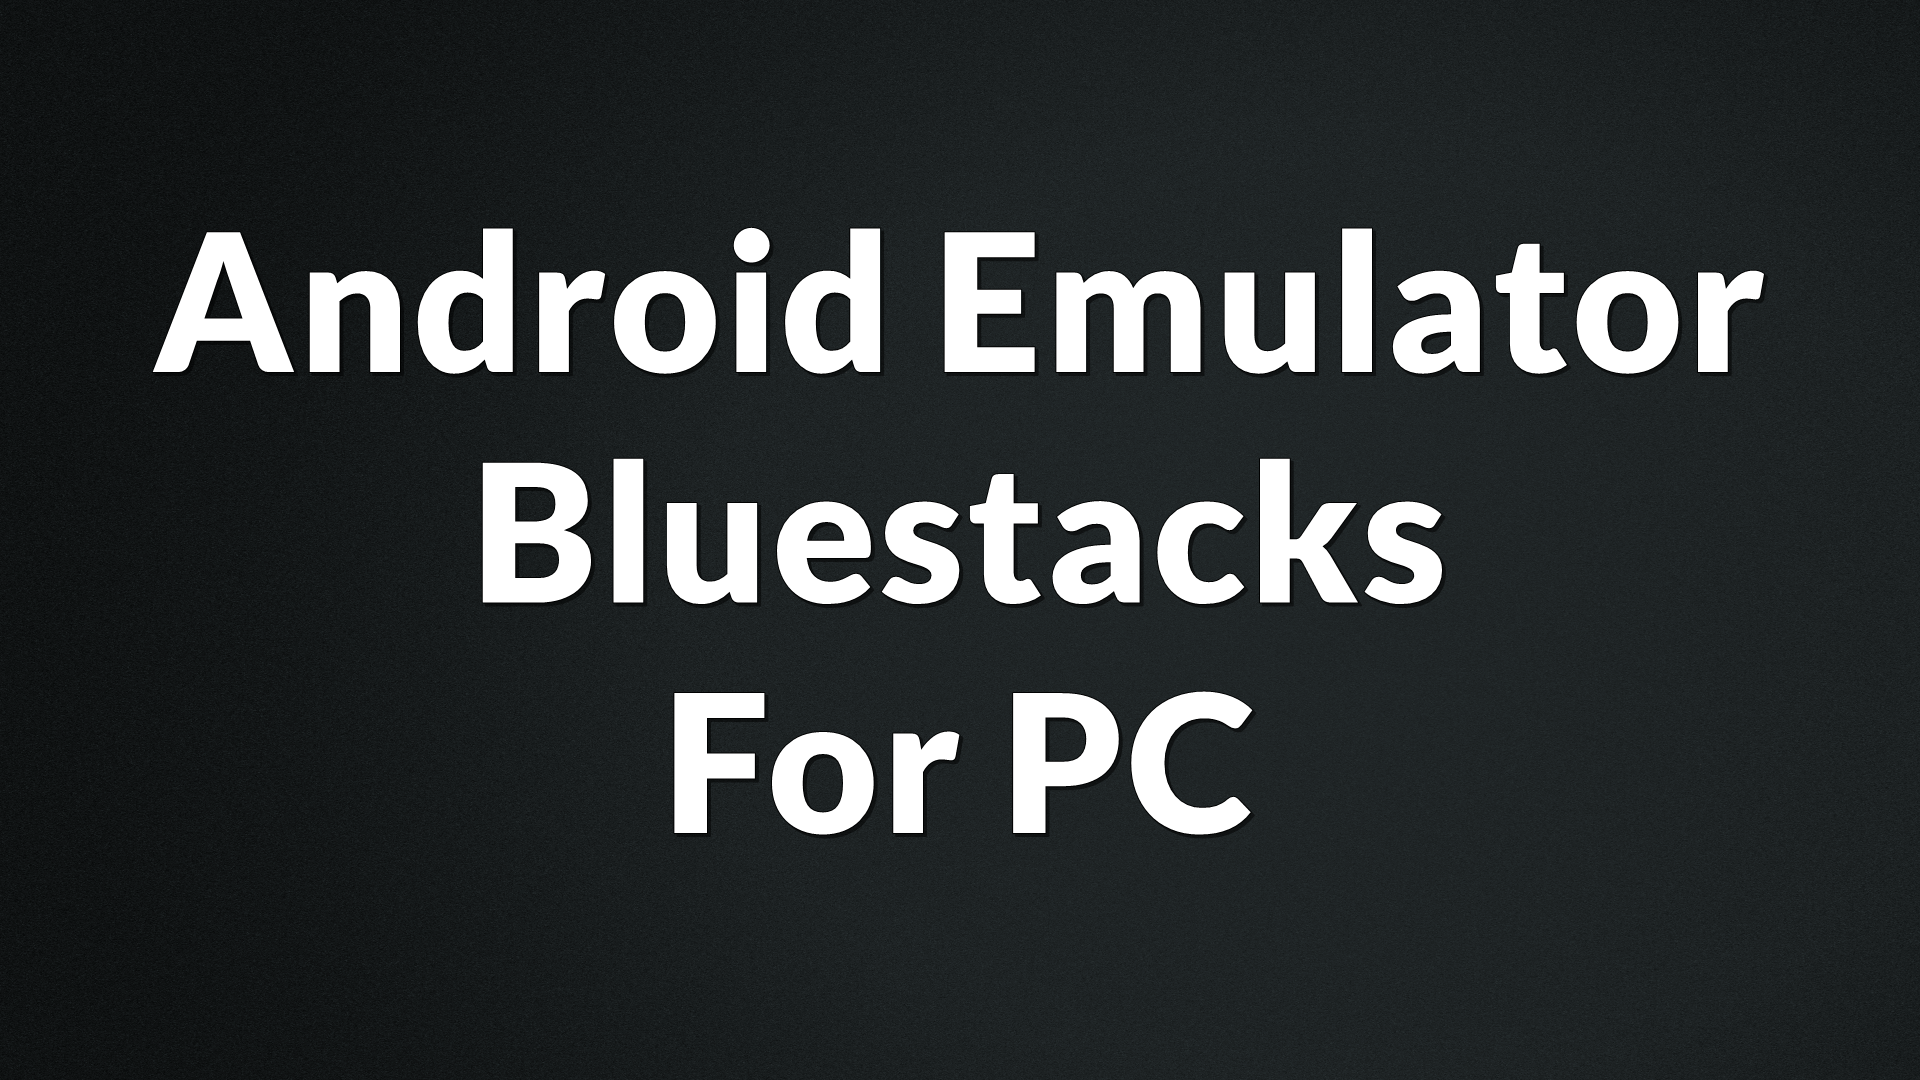 bluestacks android emulator for windows 10 free download